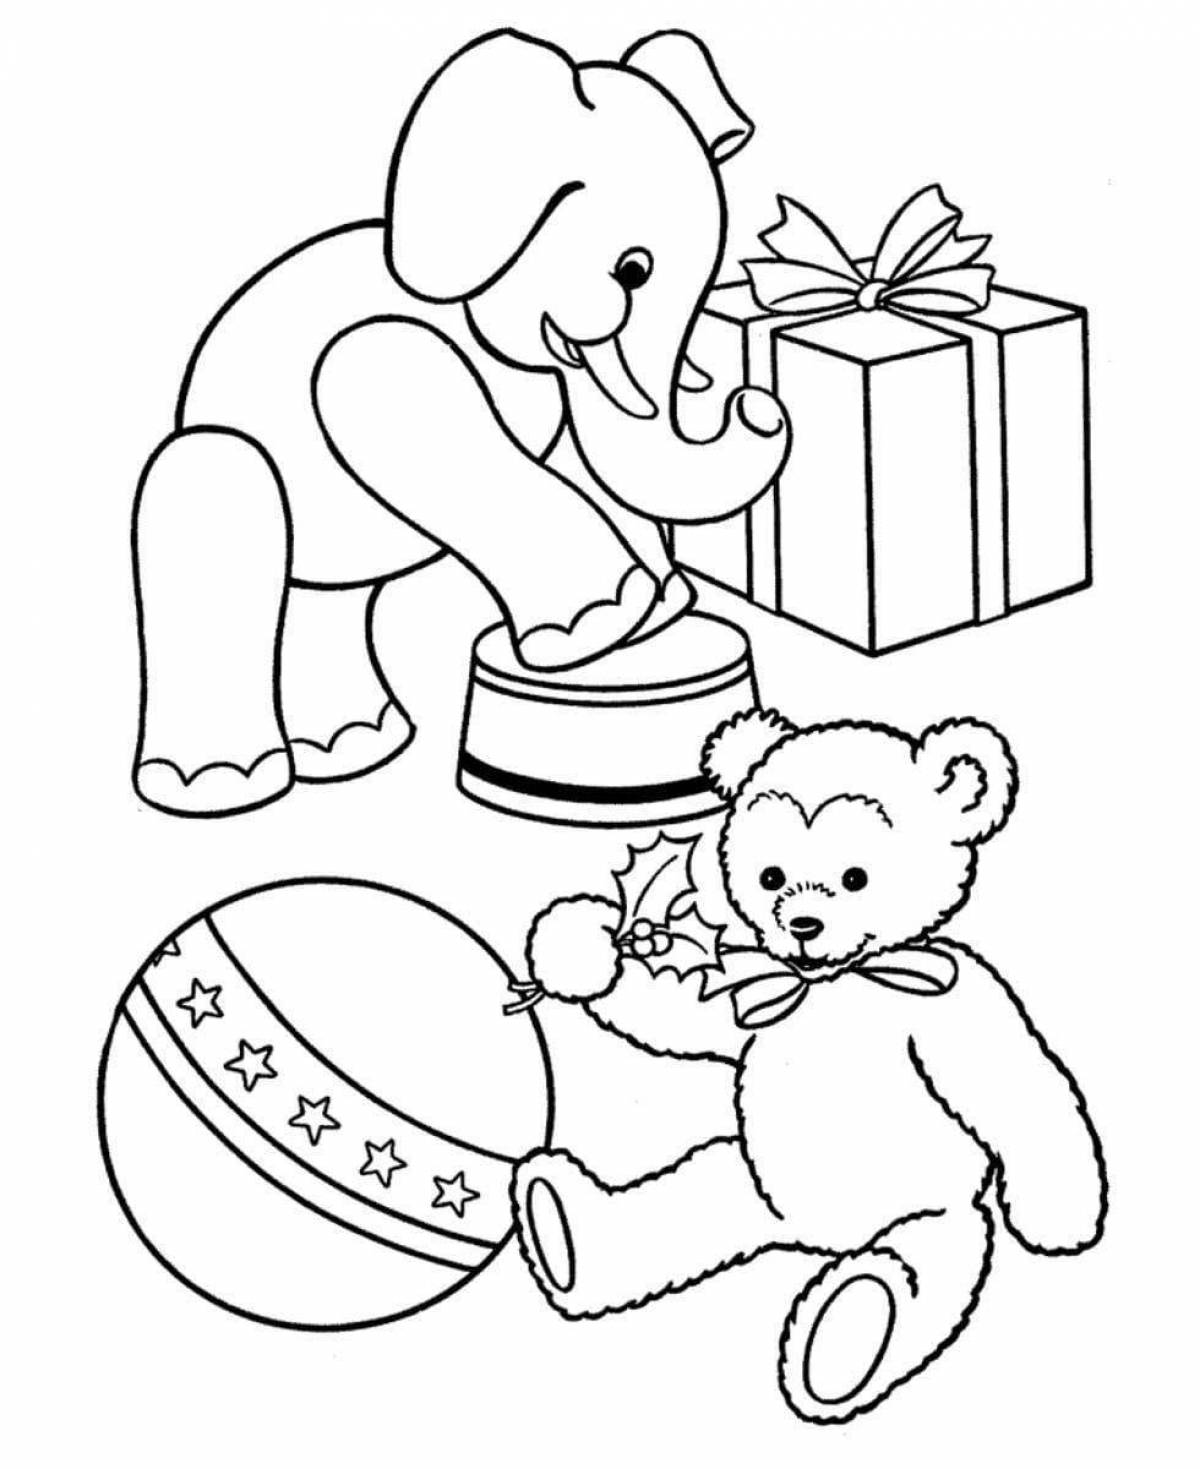 Color-frenzy coloring page для малышей 5-6 лет